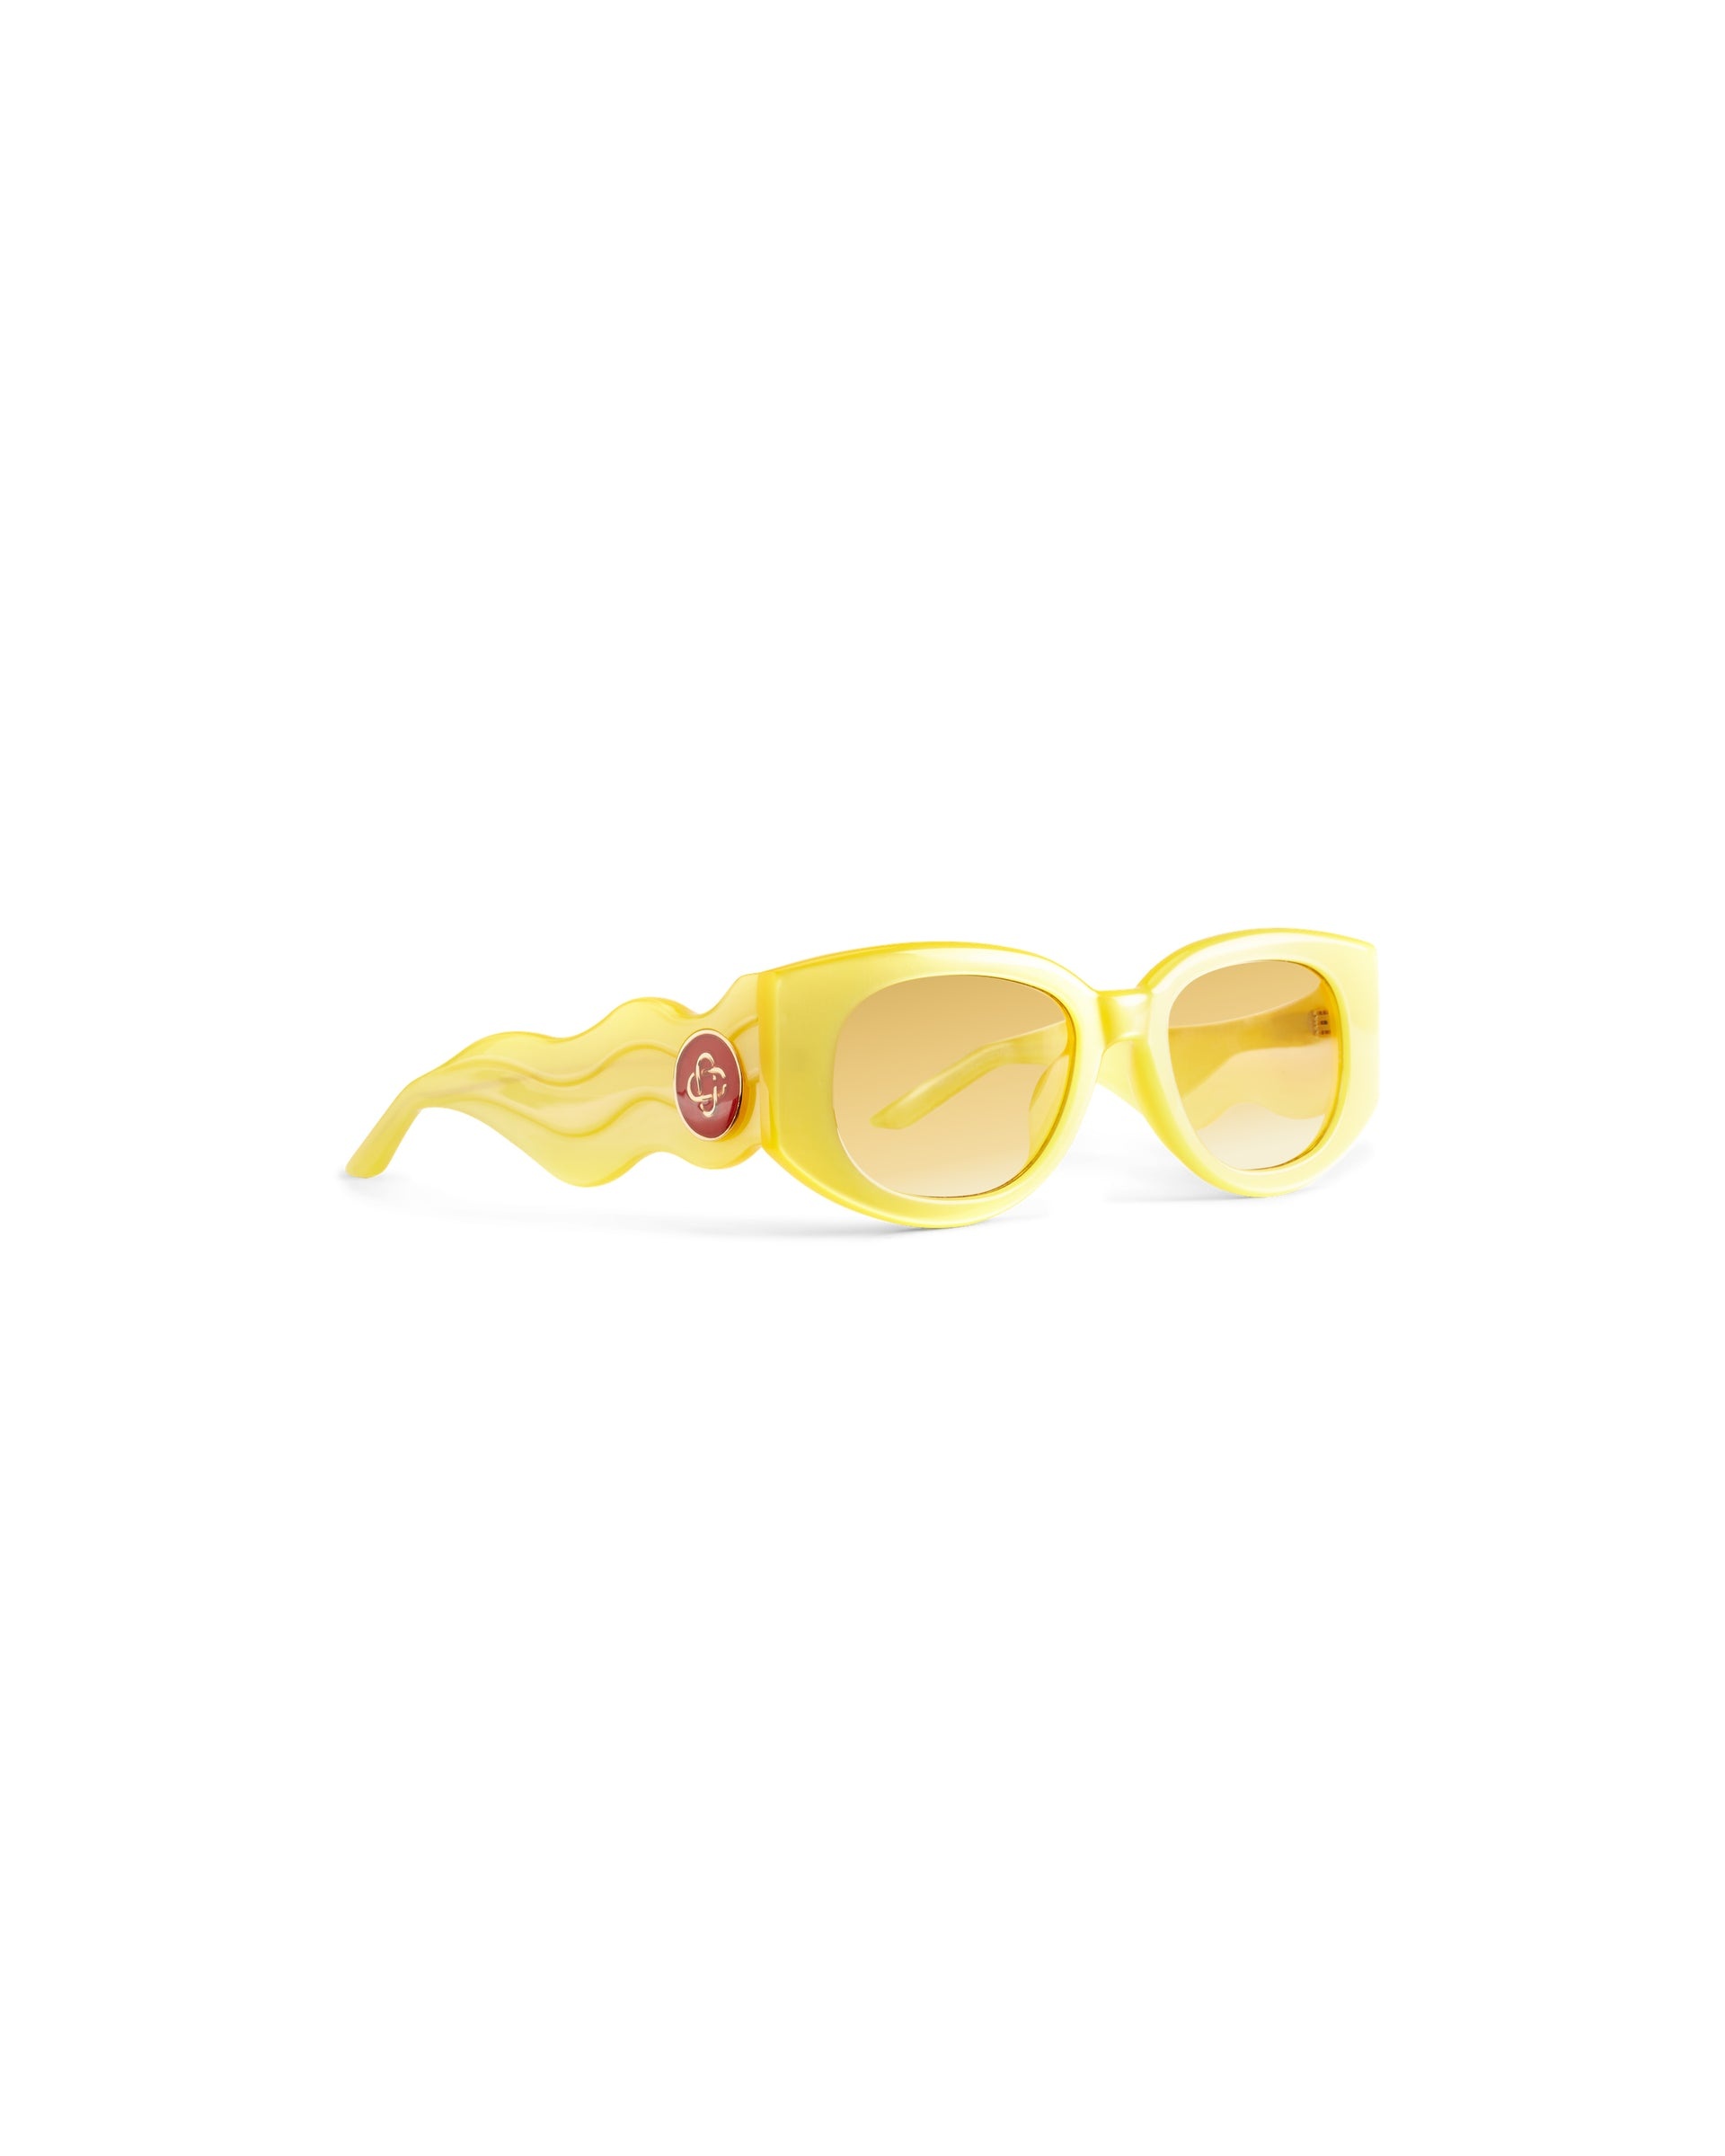 Memphis Yellow & Gold Sunglasses - 1